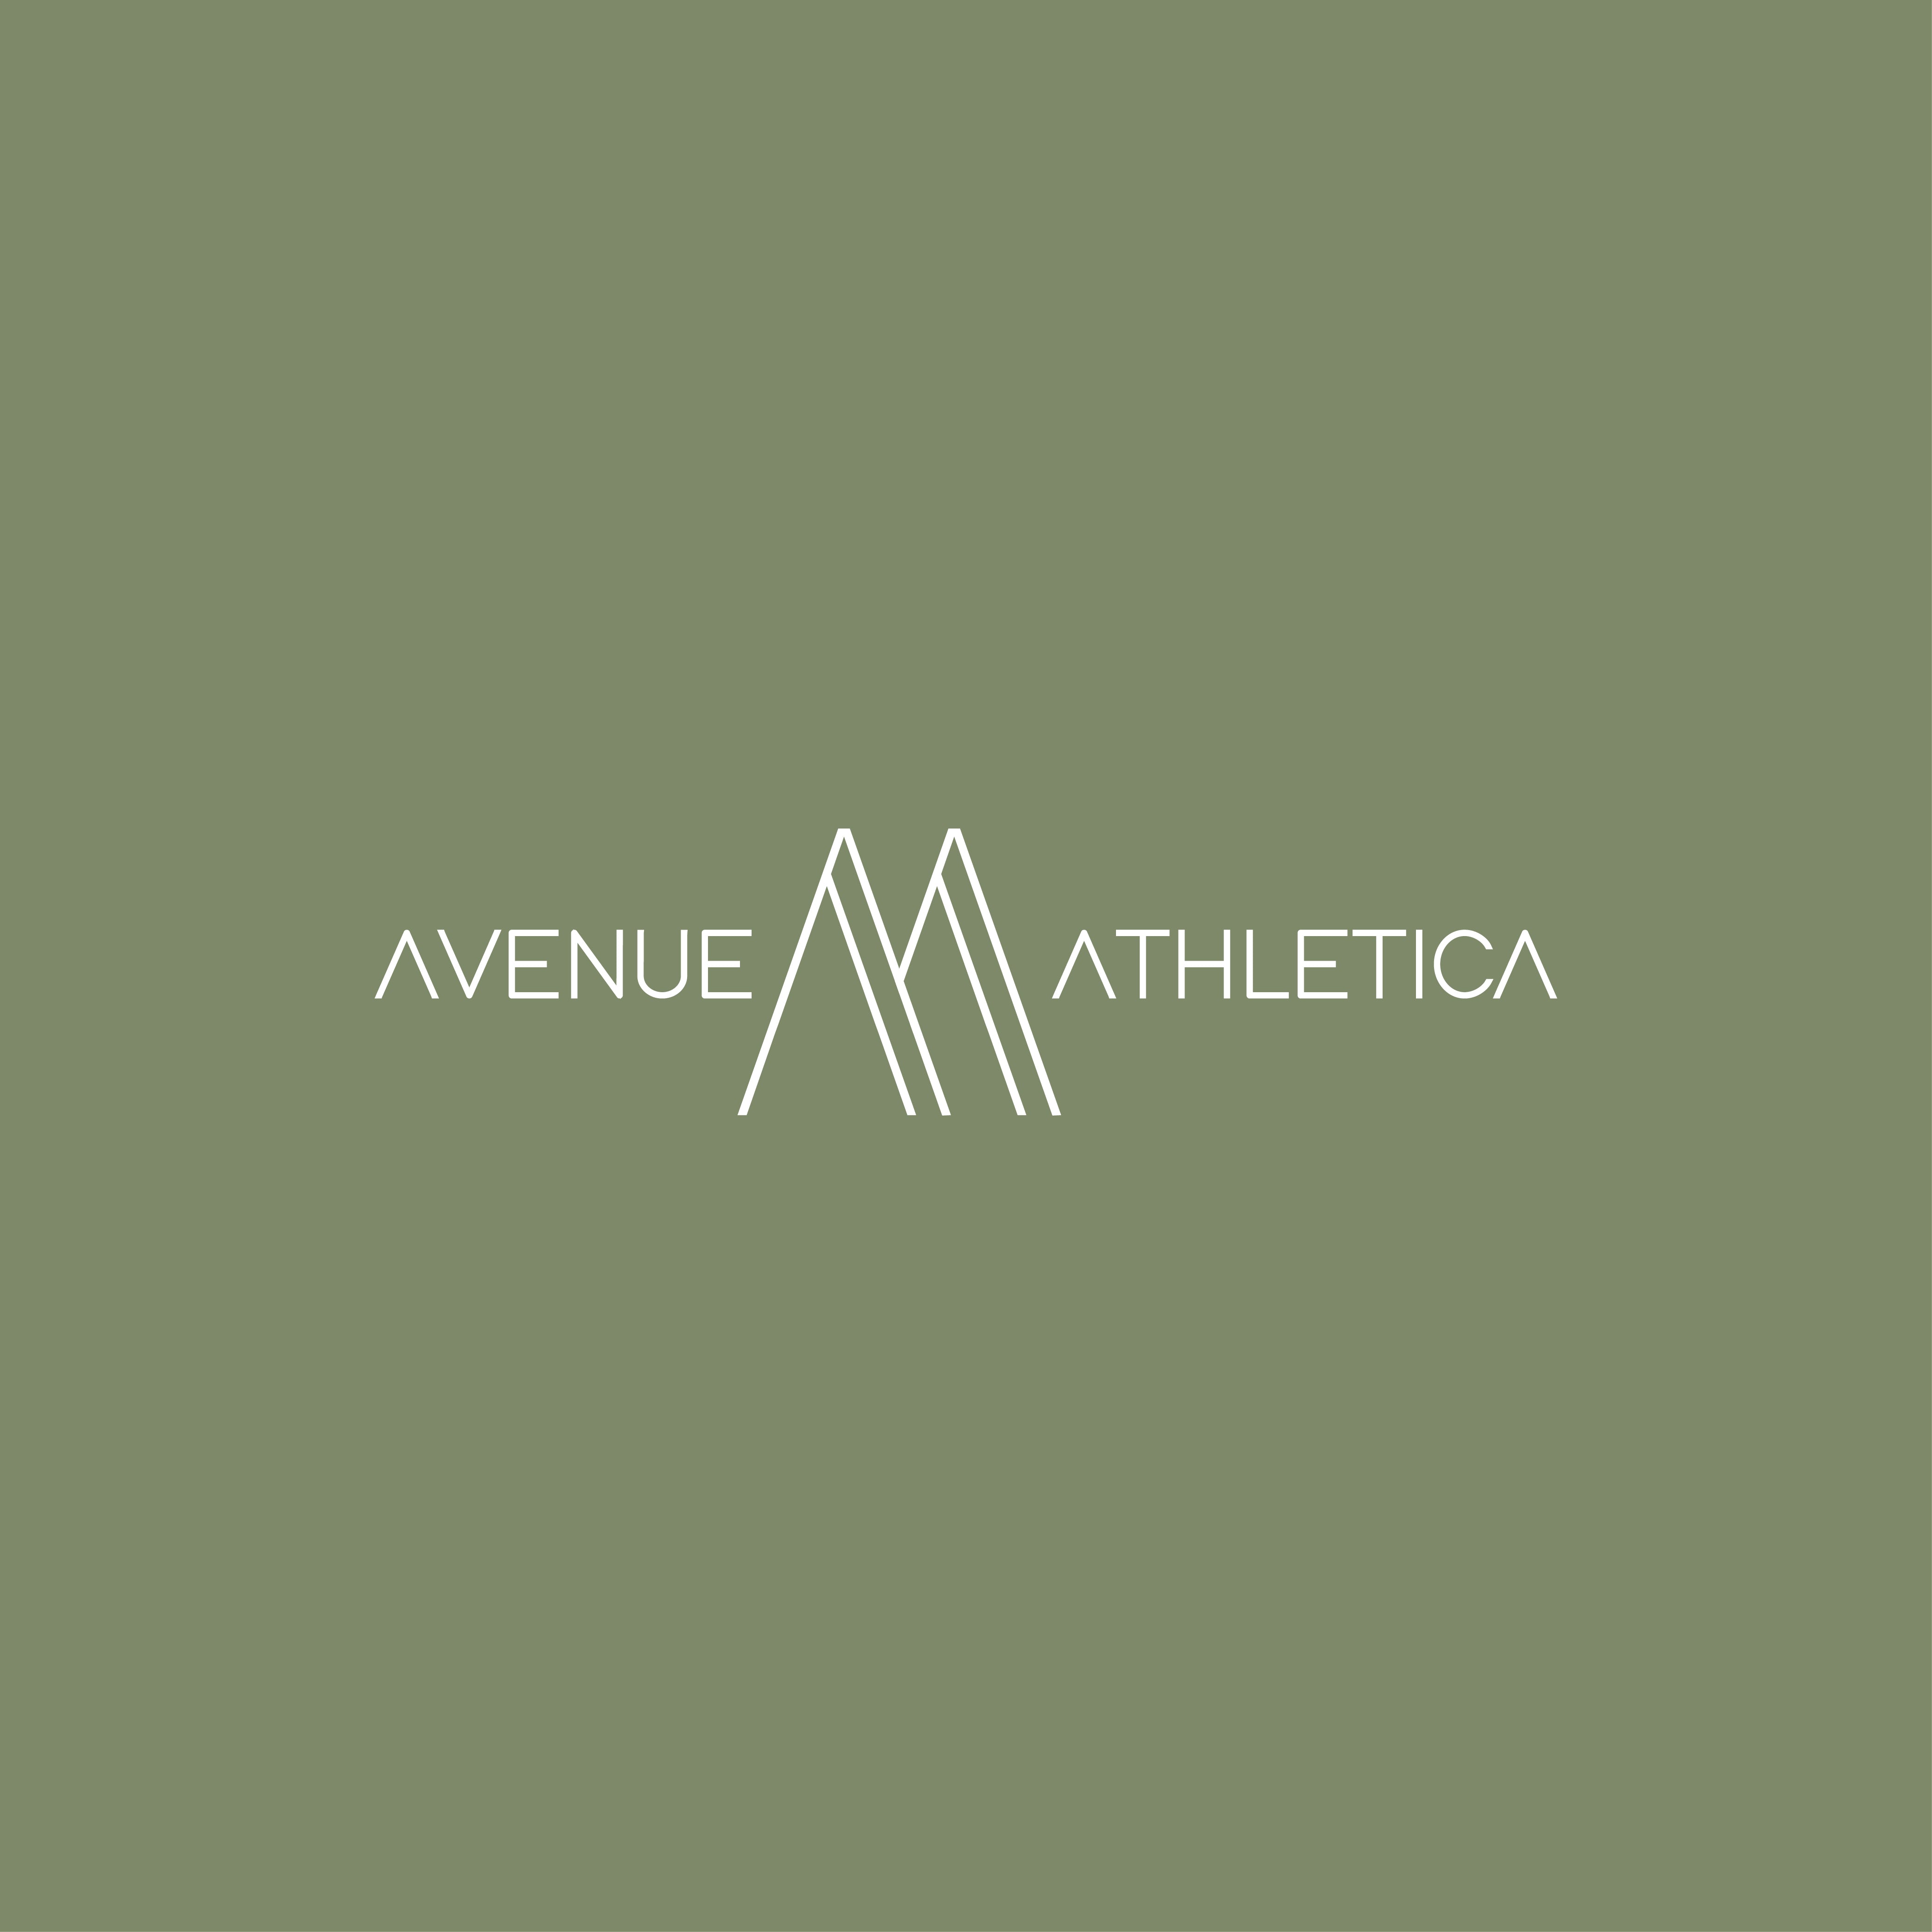 Avenue Athletica